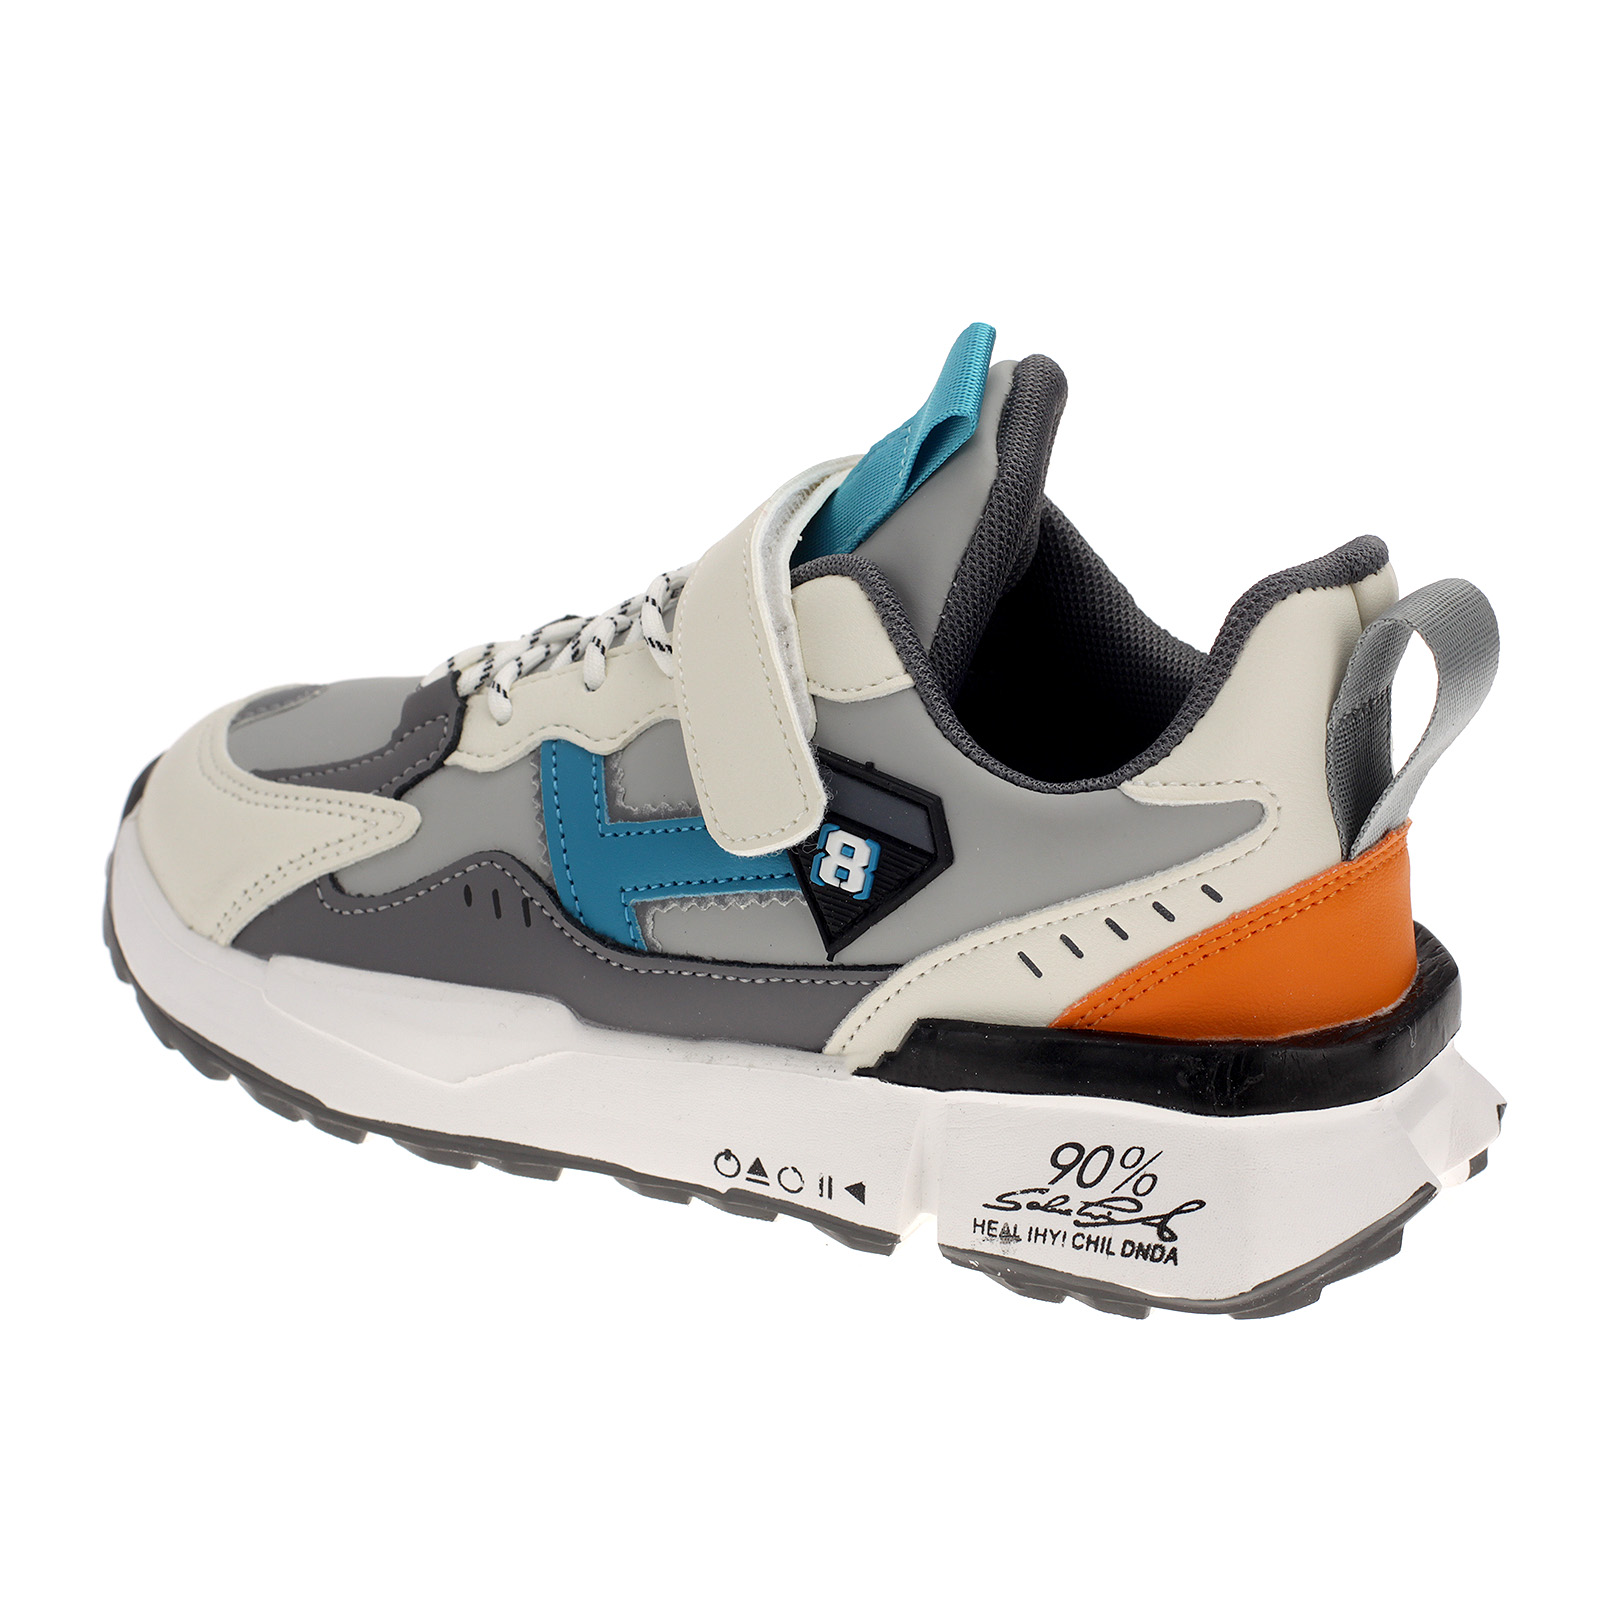 Kinderschuhe Sneaker mit Klettverschluss 4046 Grau Blau